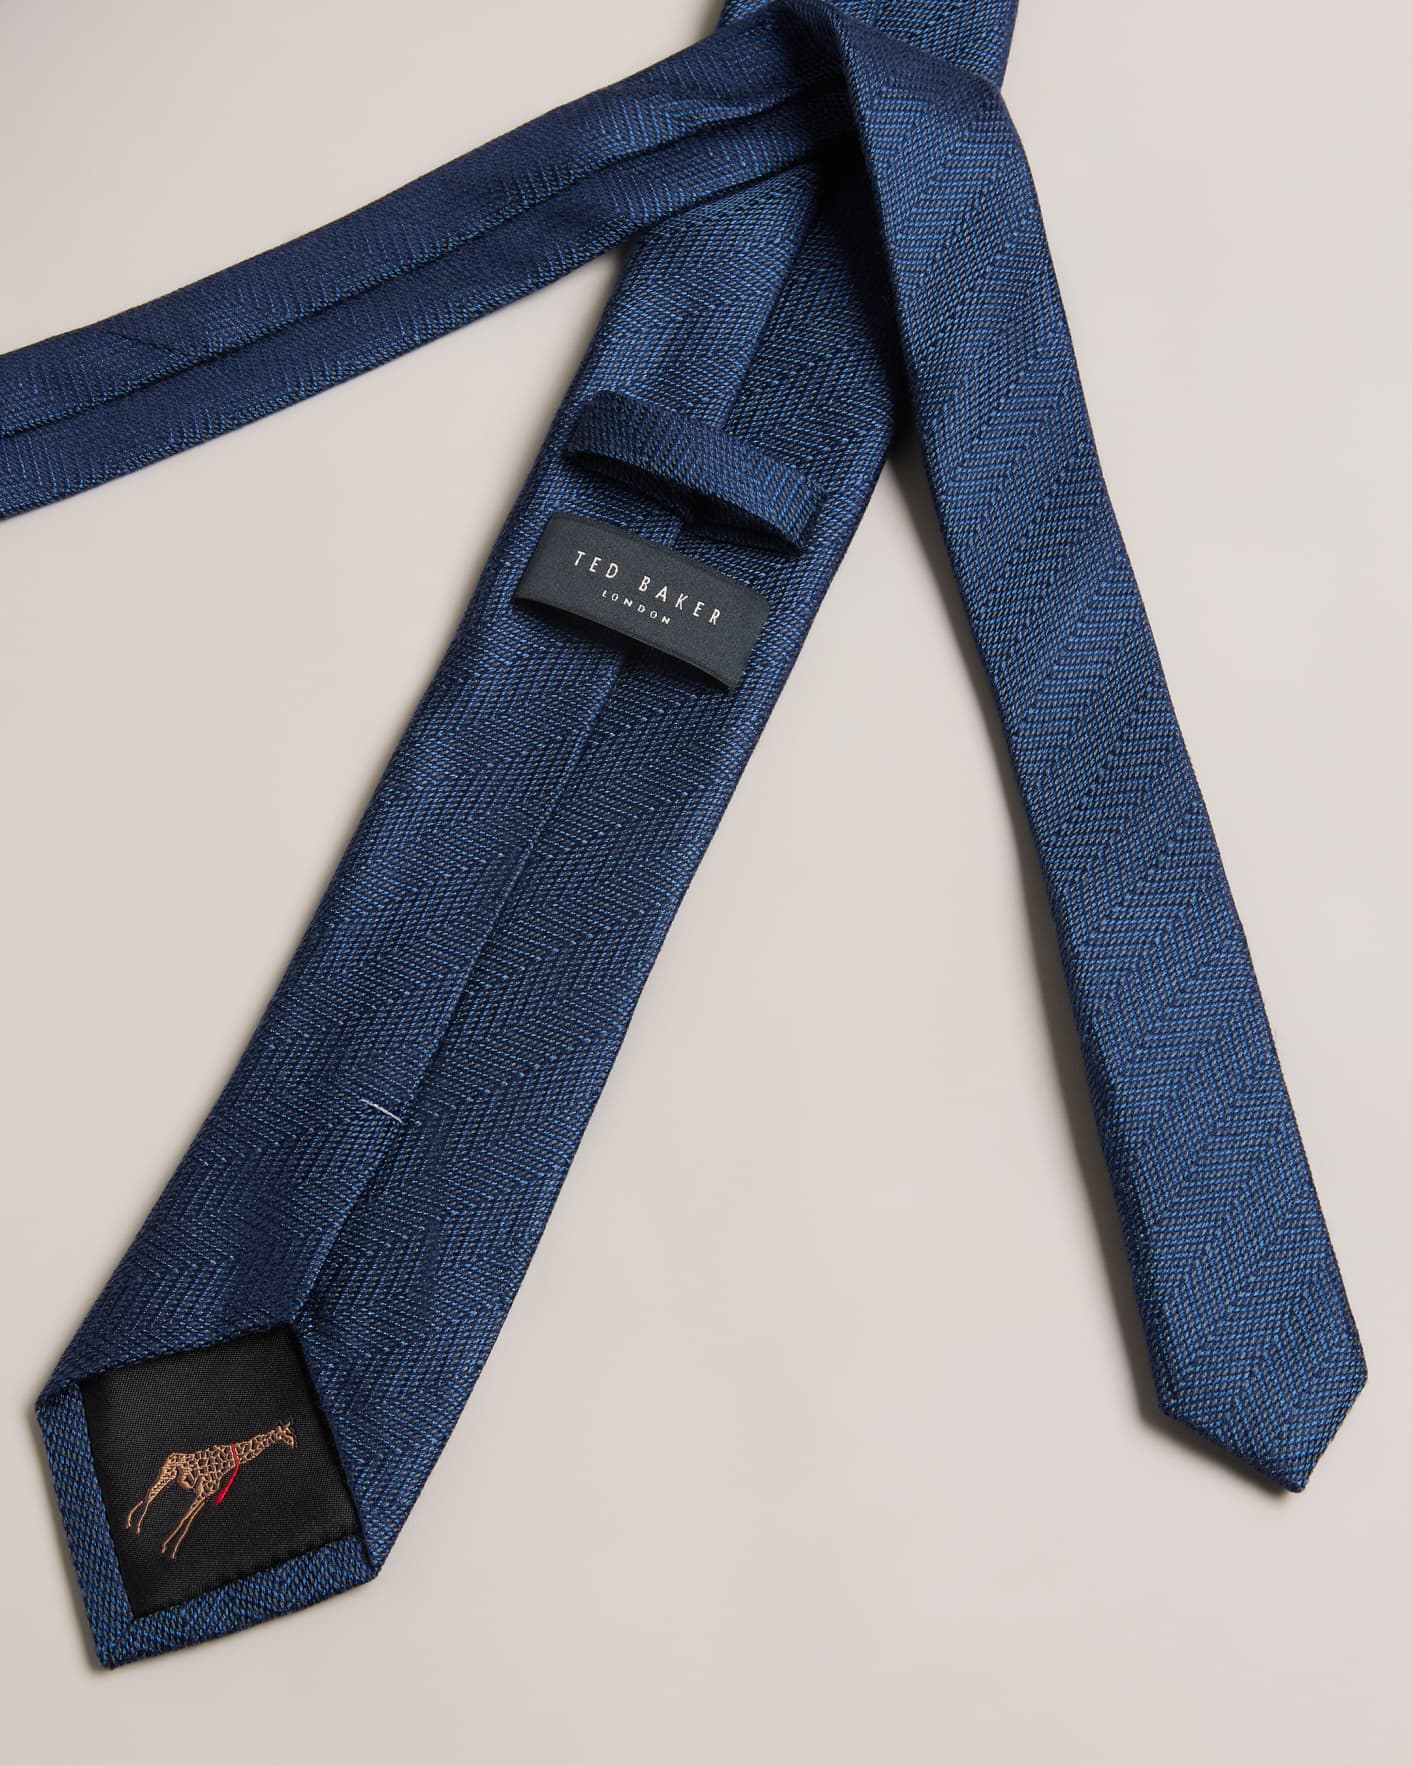 THALLO - TEAL-BLUE, Ties & Bow Ties